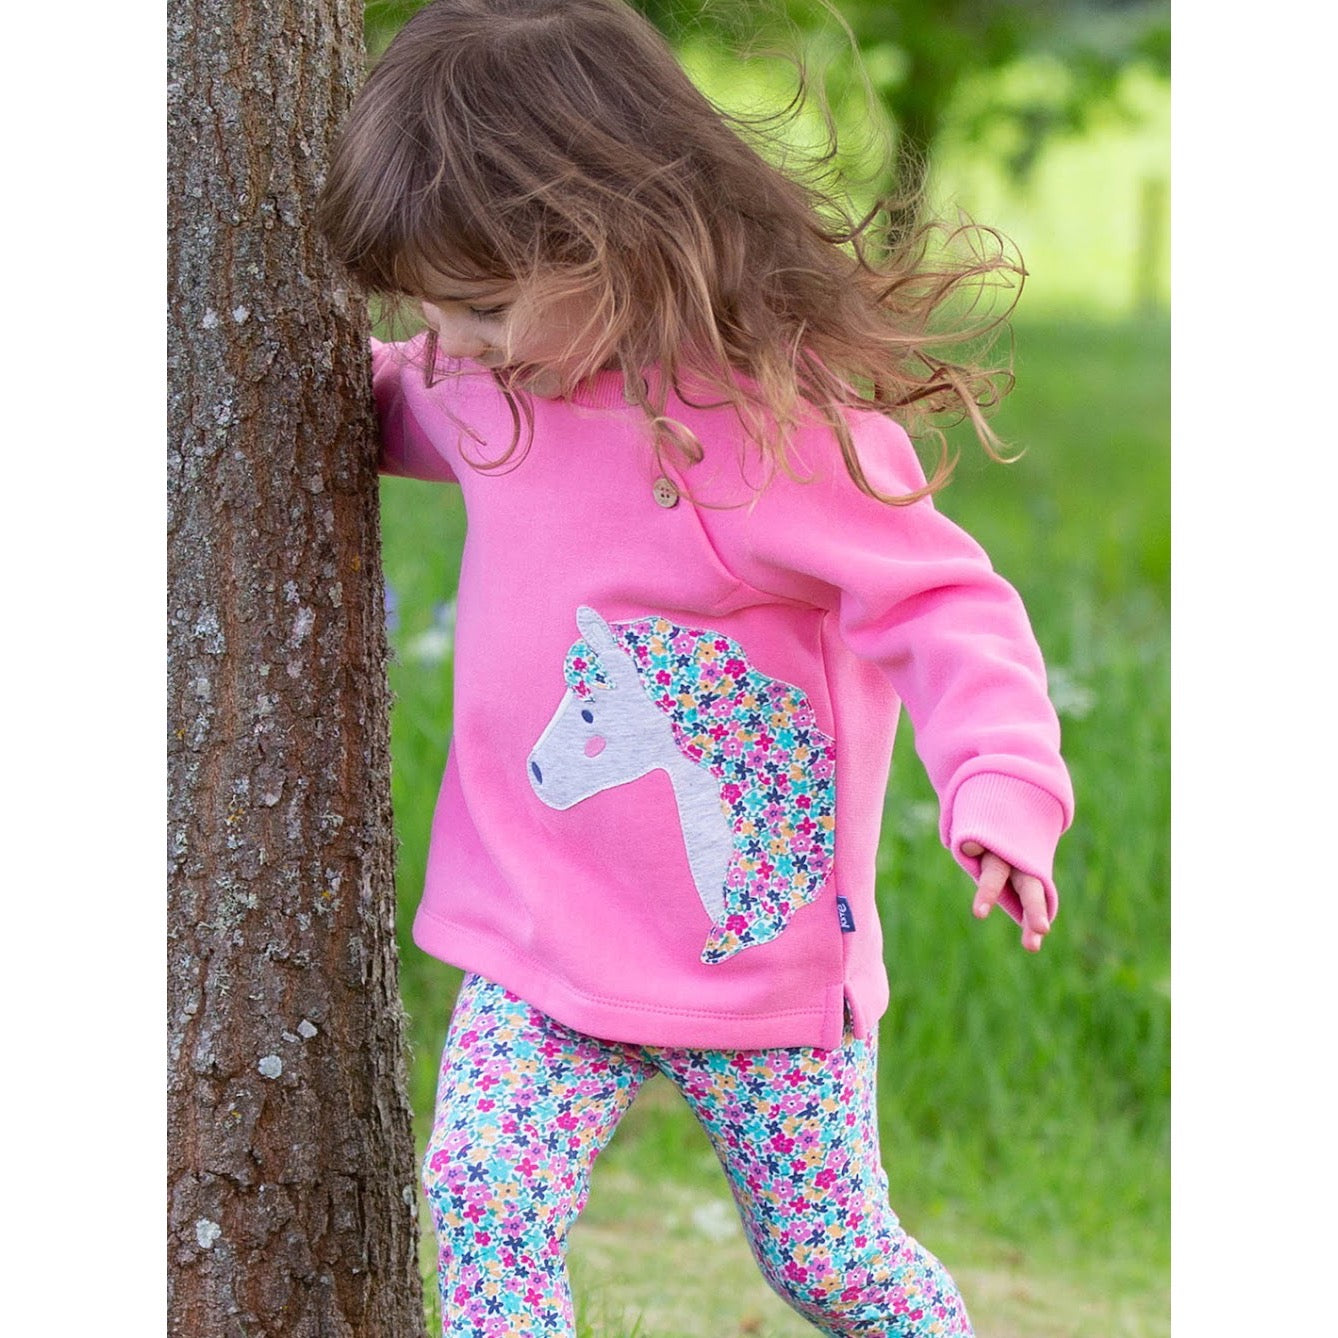 Kite Pony Infant Sweatshirt F384 Clothing 6-9M / Pink,9-12M / Pink,12-18M / Pink,18-24M/2Y / Pink